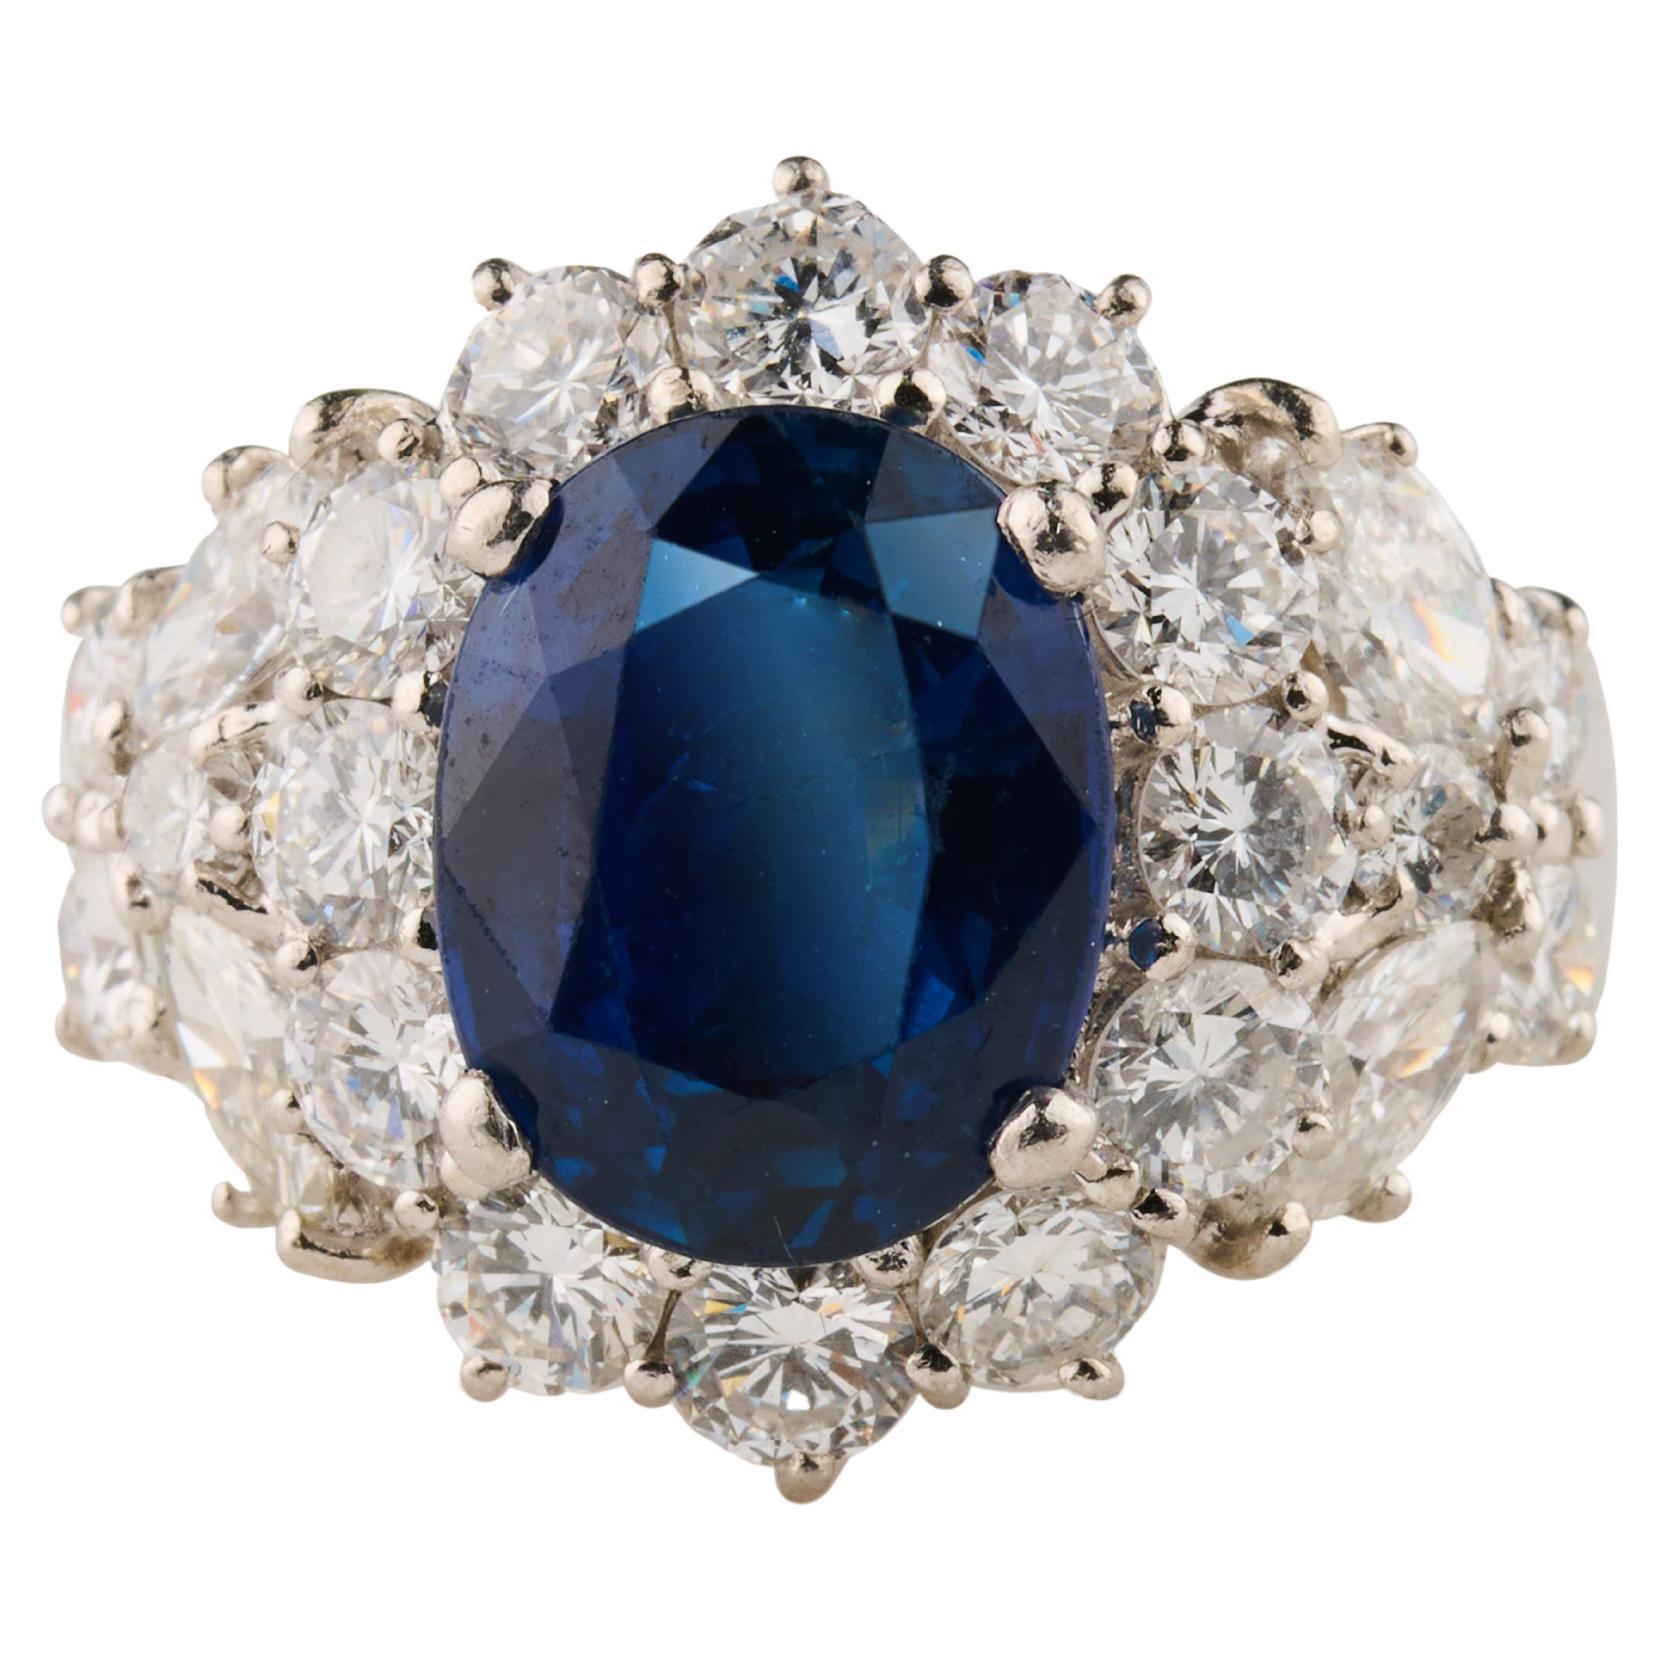 4.67 carat sapphire and 2.62 carat diamond statement ring